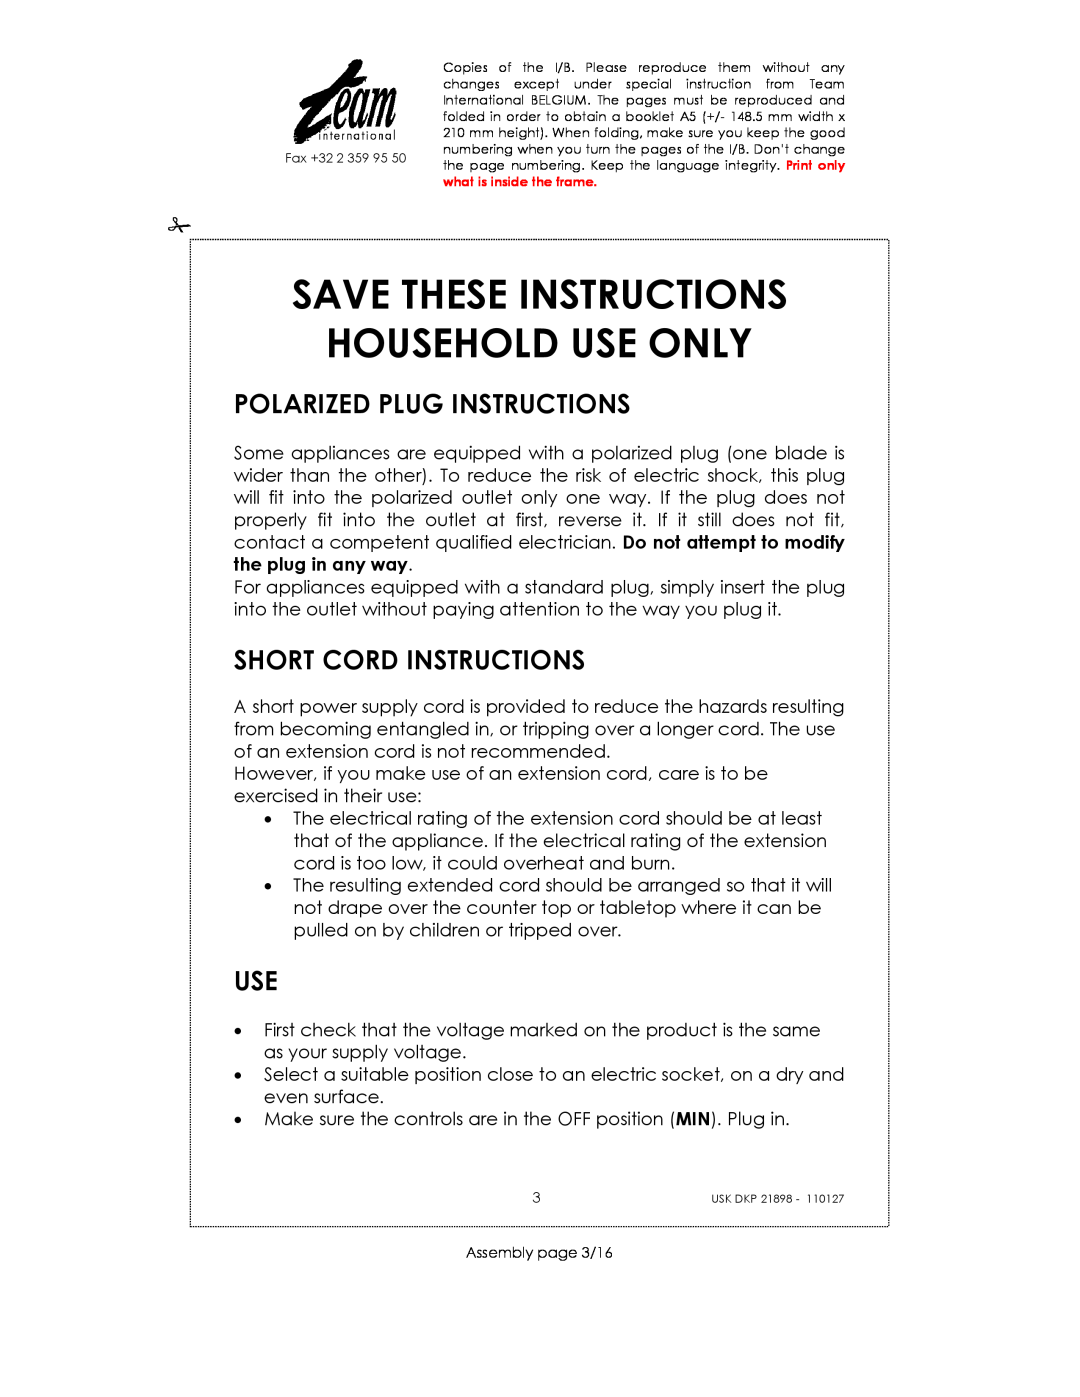 Kalorik USK DKP 21898 Save These Instructions Household Use Only, Polarized Plug Instructions, Short Cord Instructions 